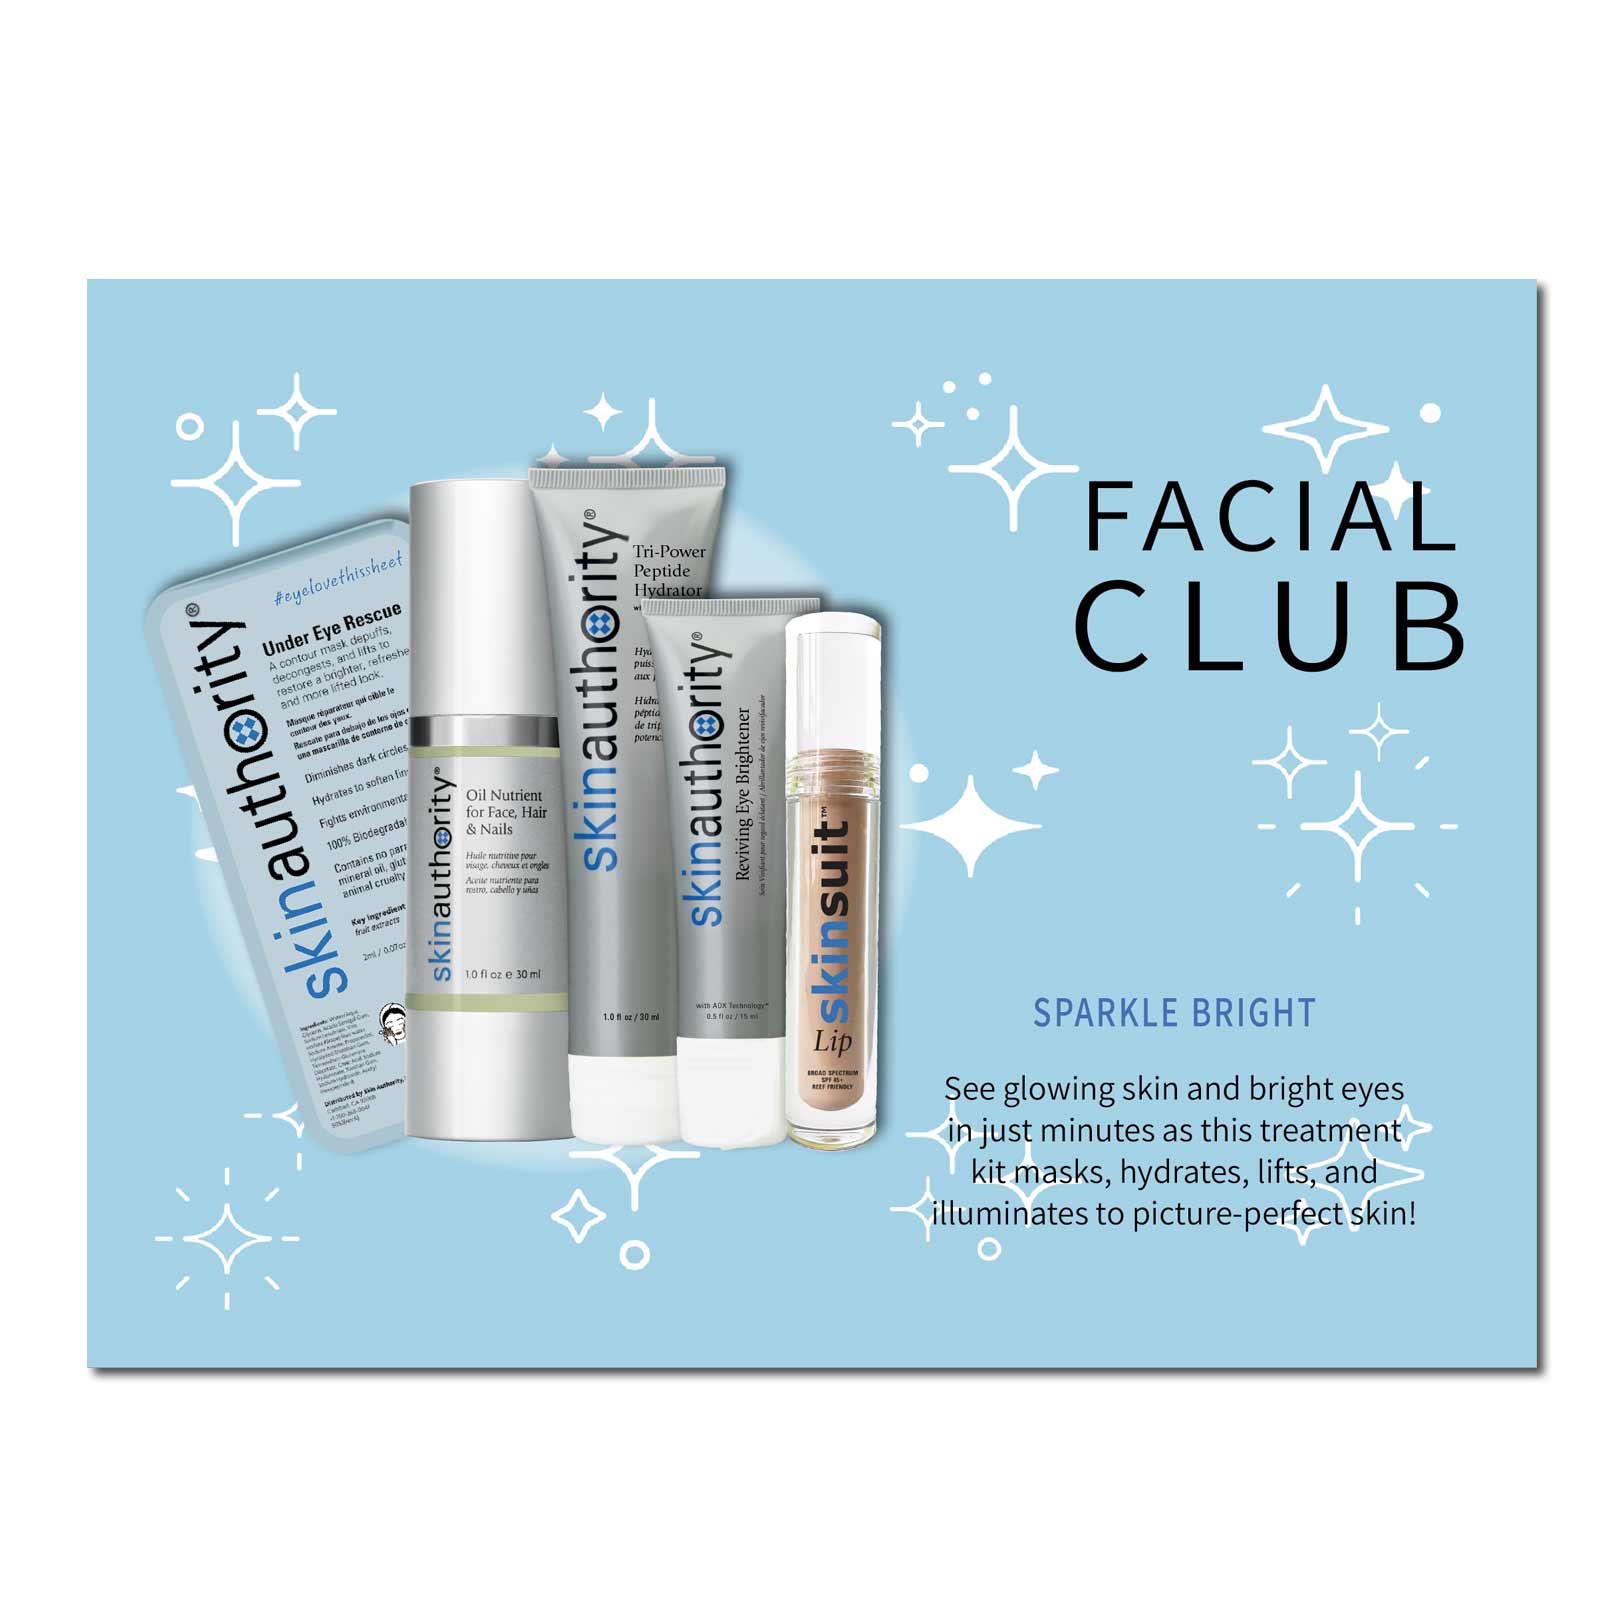 Facial Club: Sparkle Bright Kit